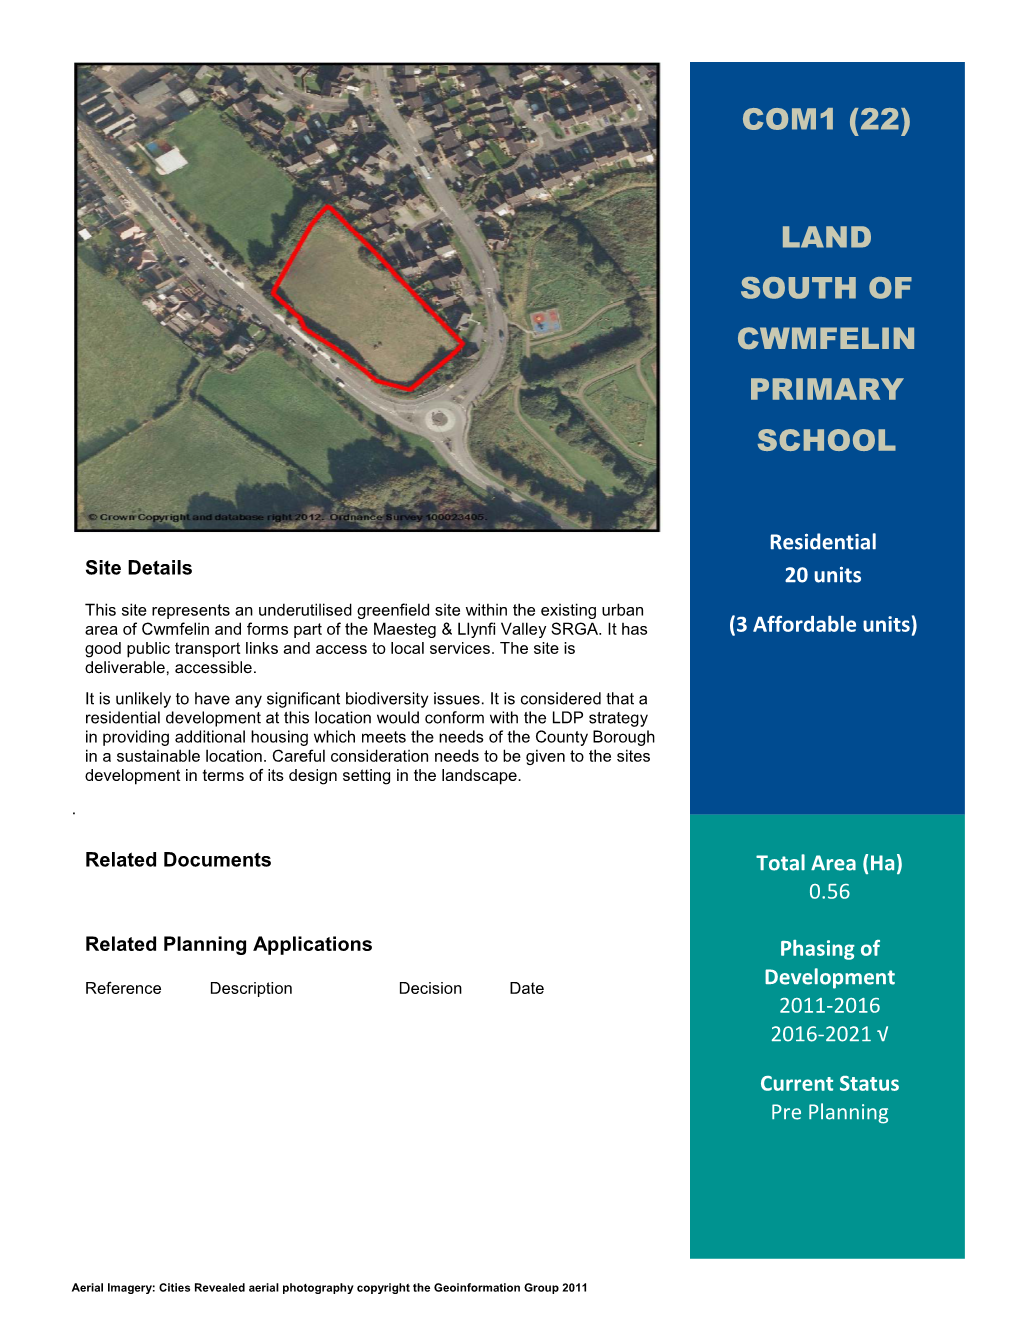 Com1 (22) Land South of Cwmfelin Primary School